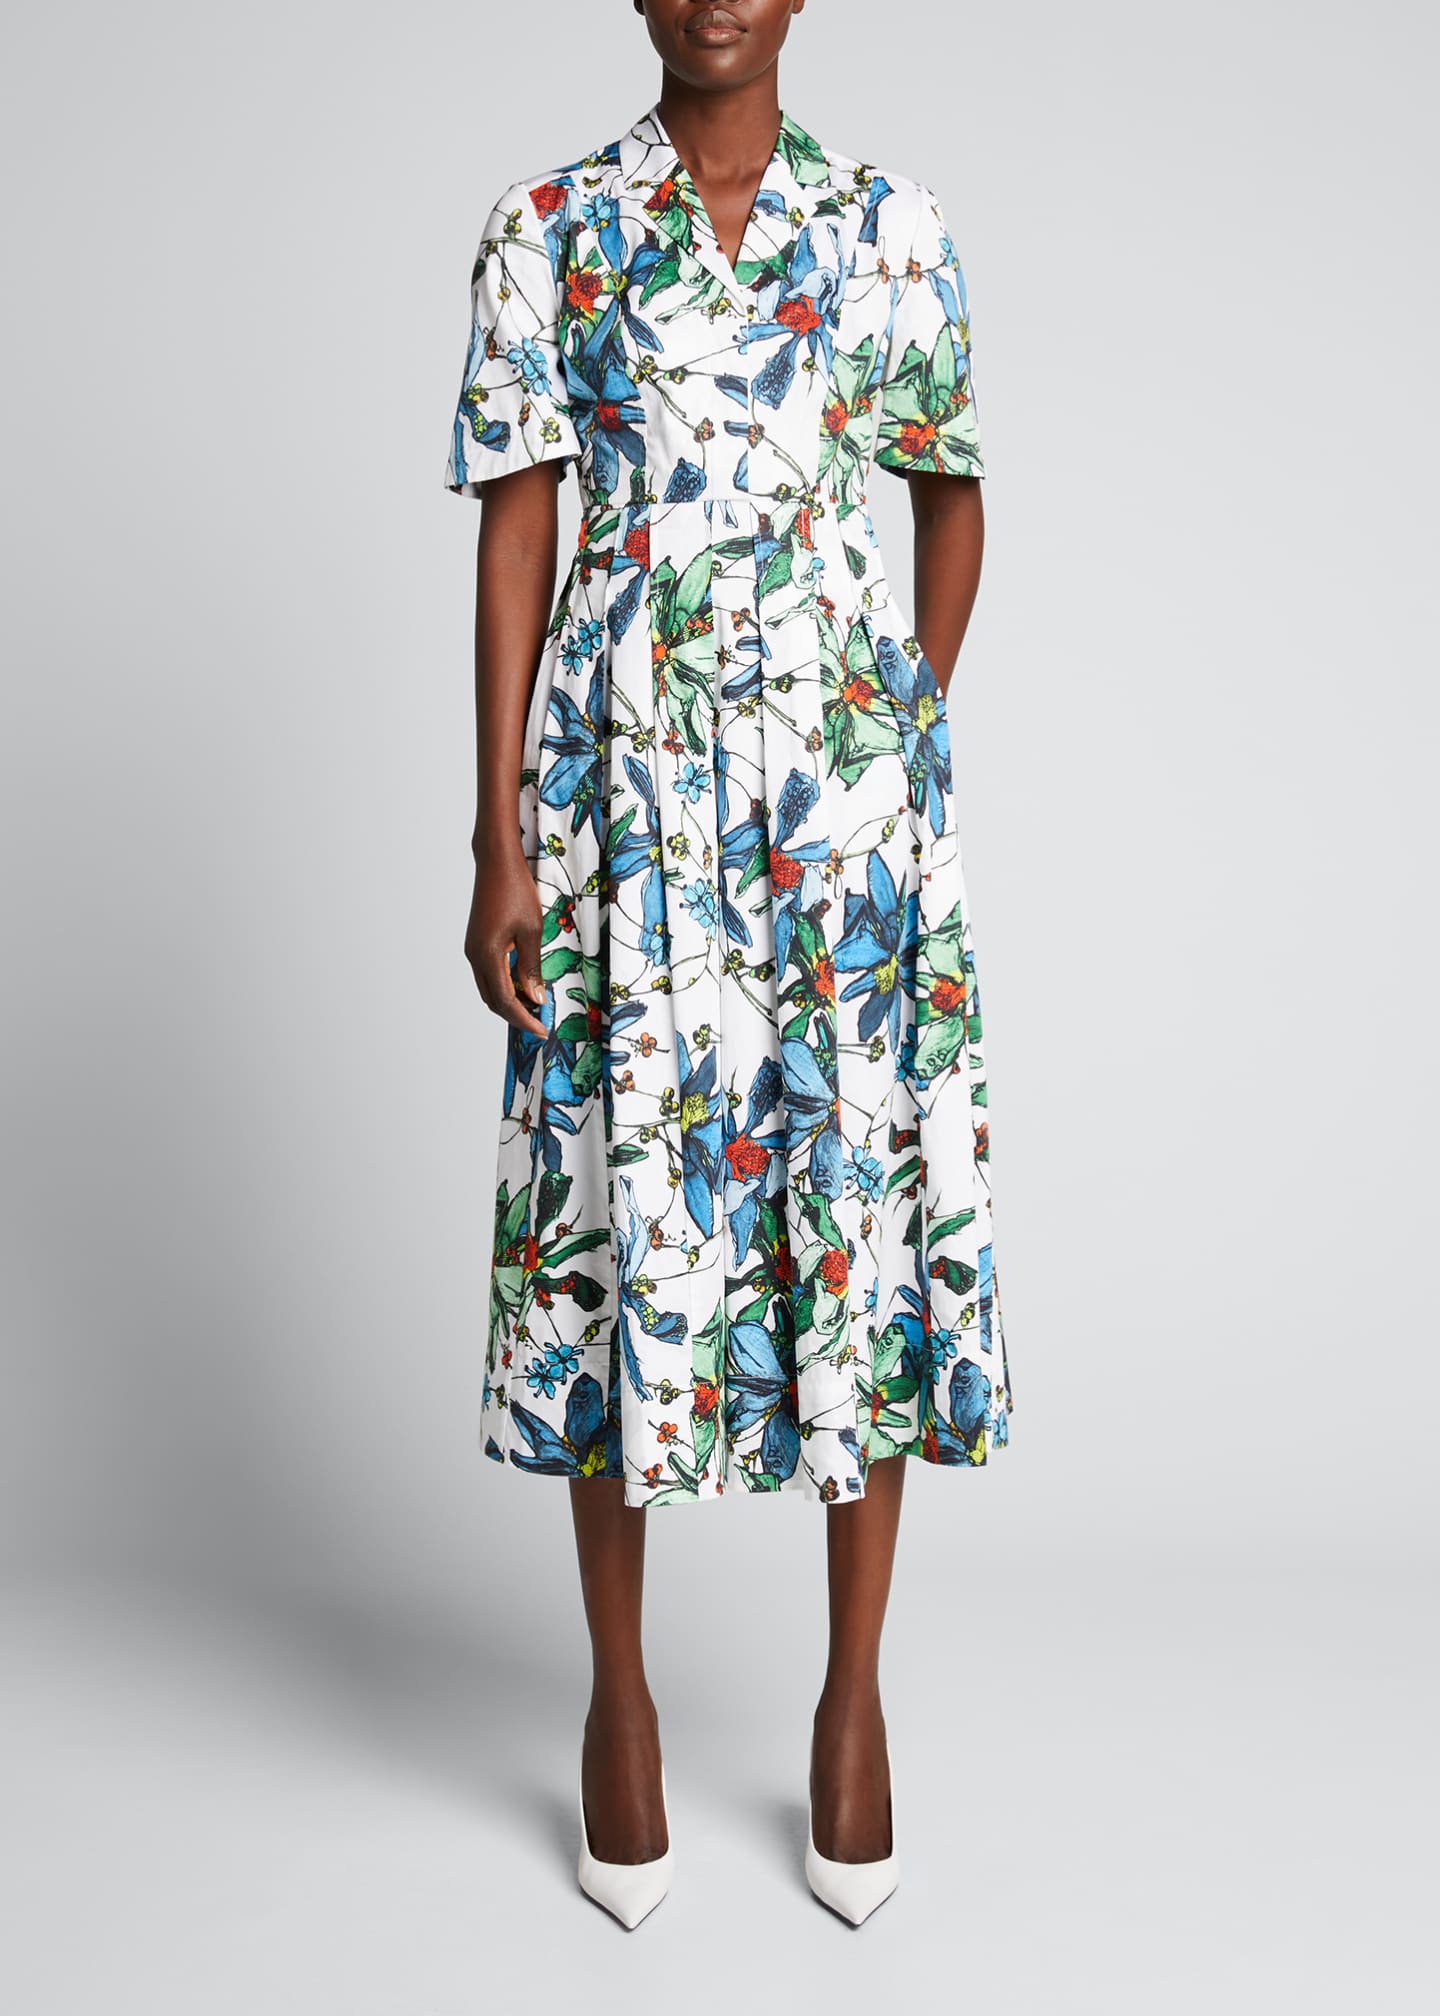 Jason Wu Collection Floral-Print Day Dress - Bergdorf Goodman